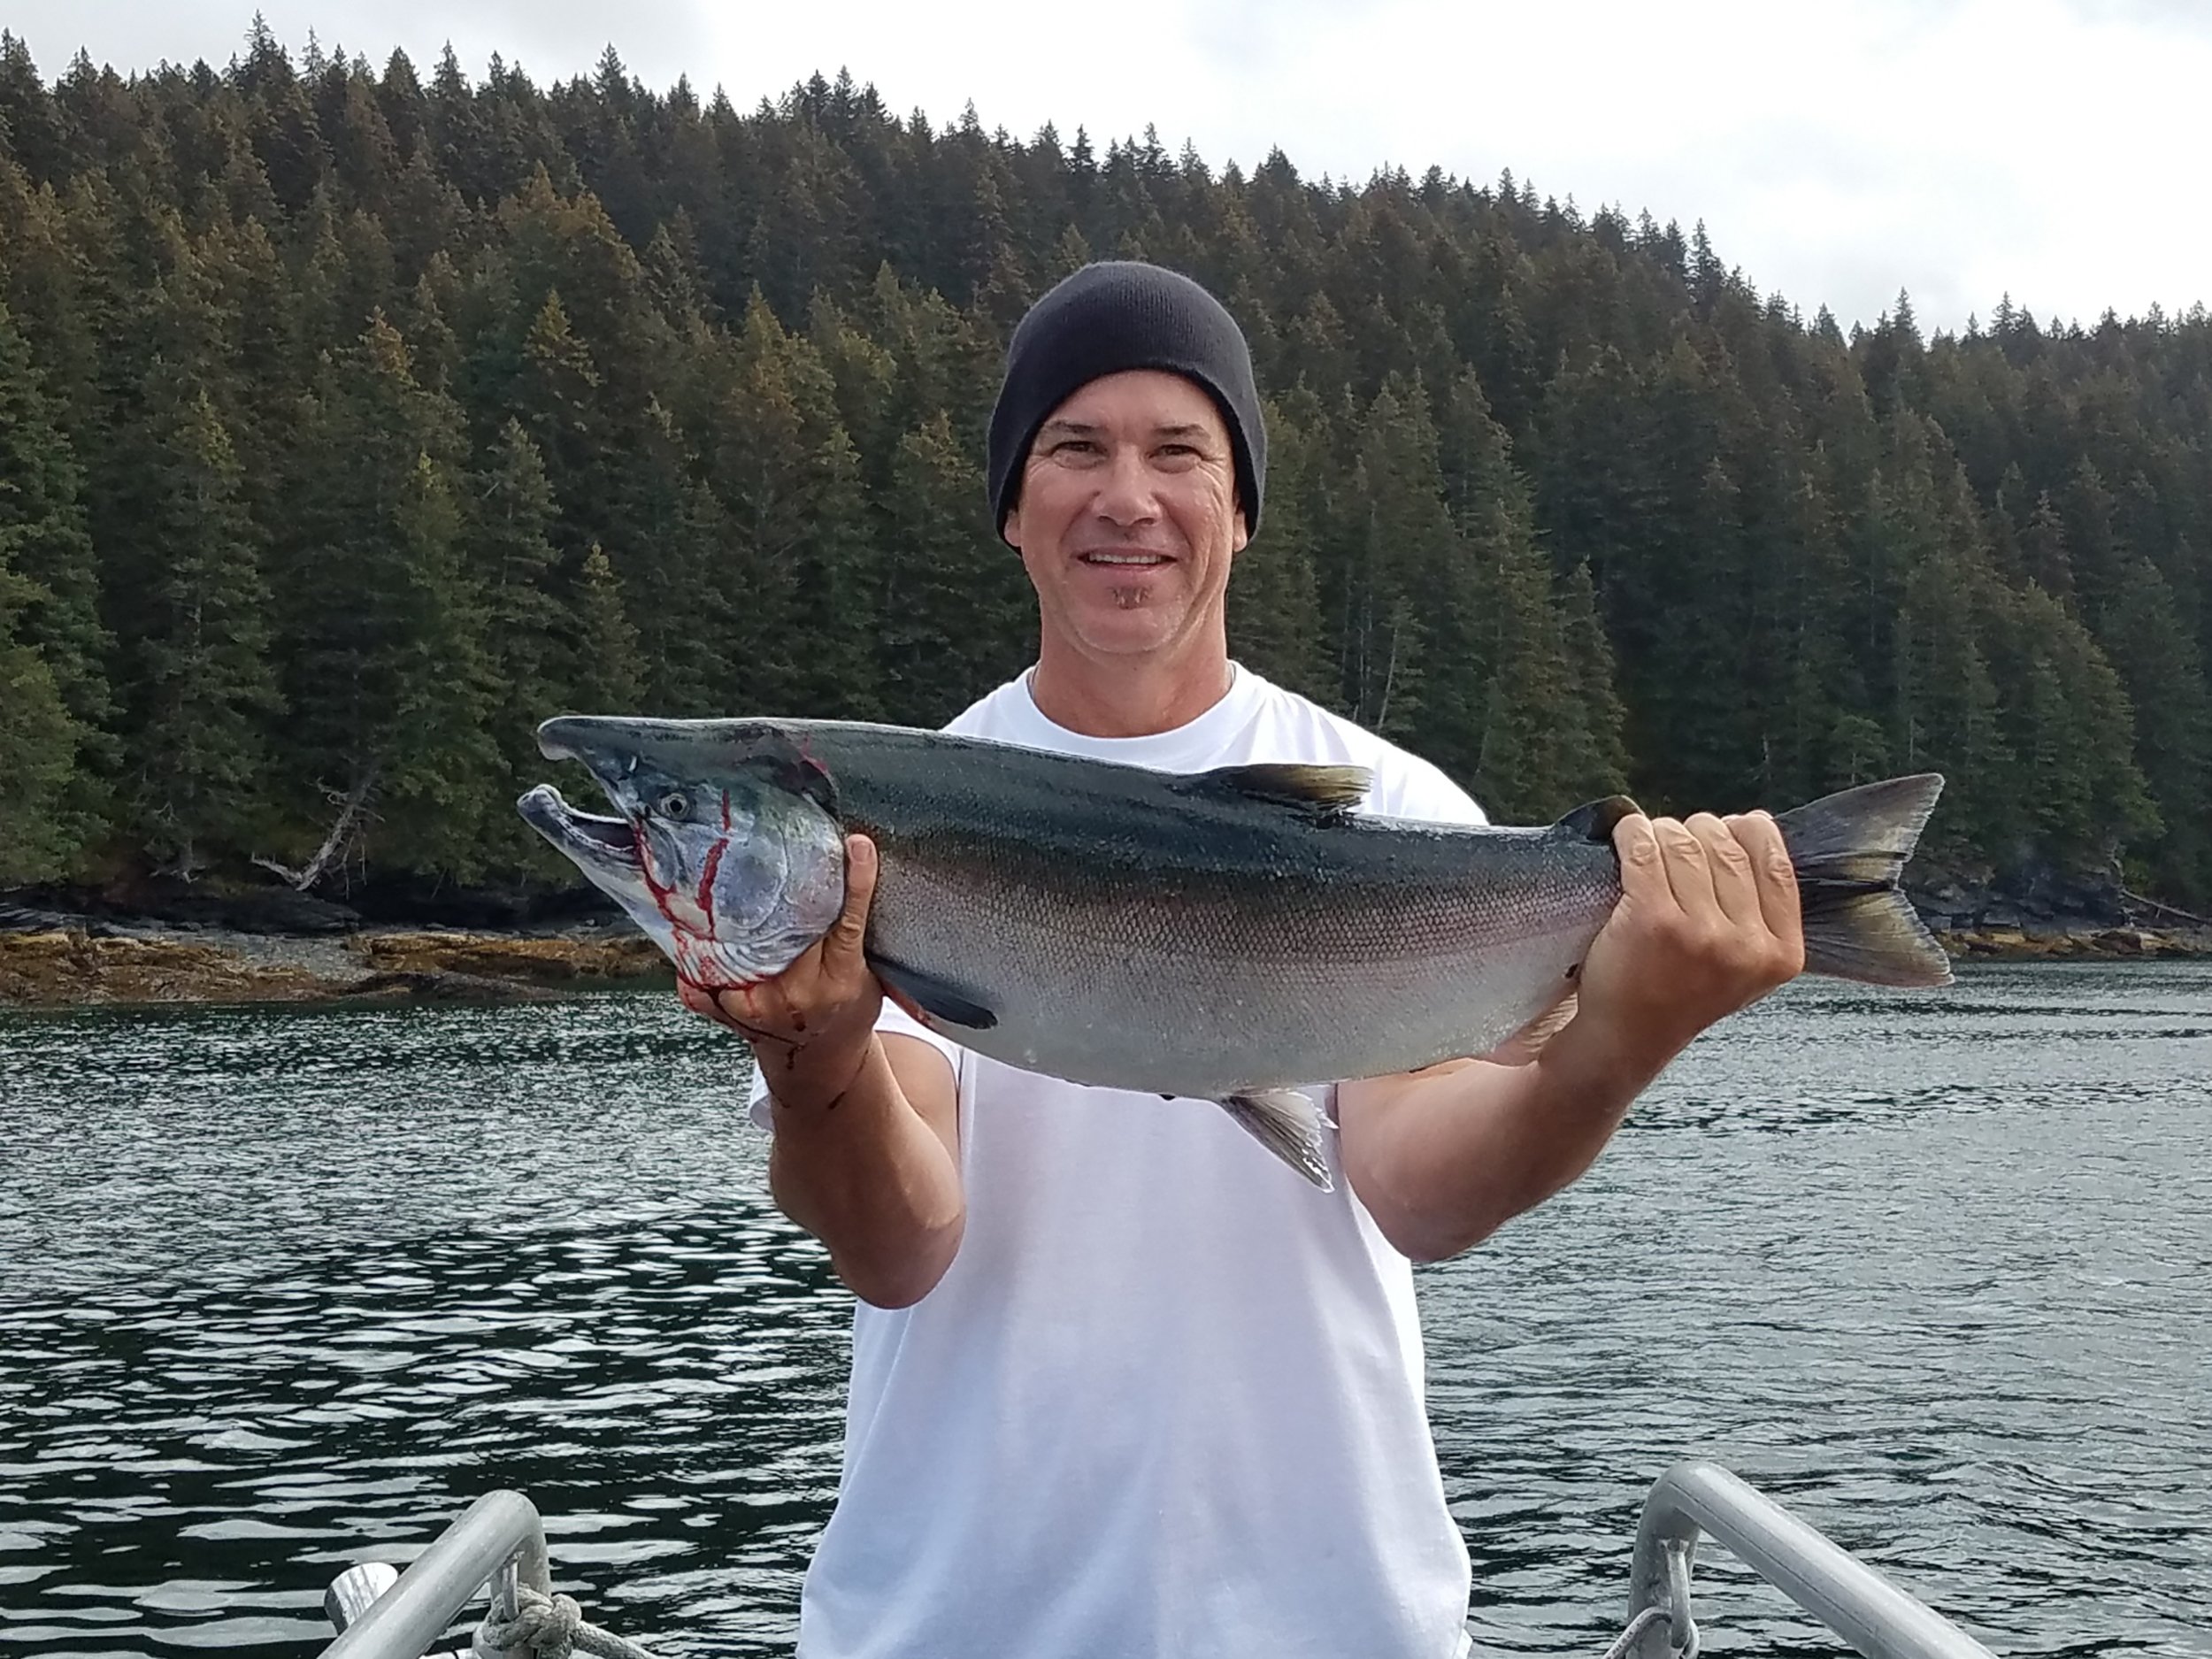 Nice silver salmon